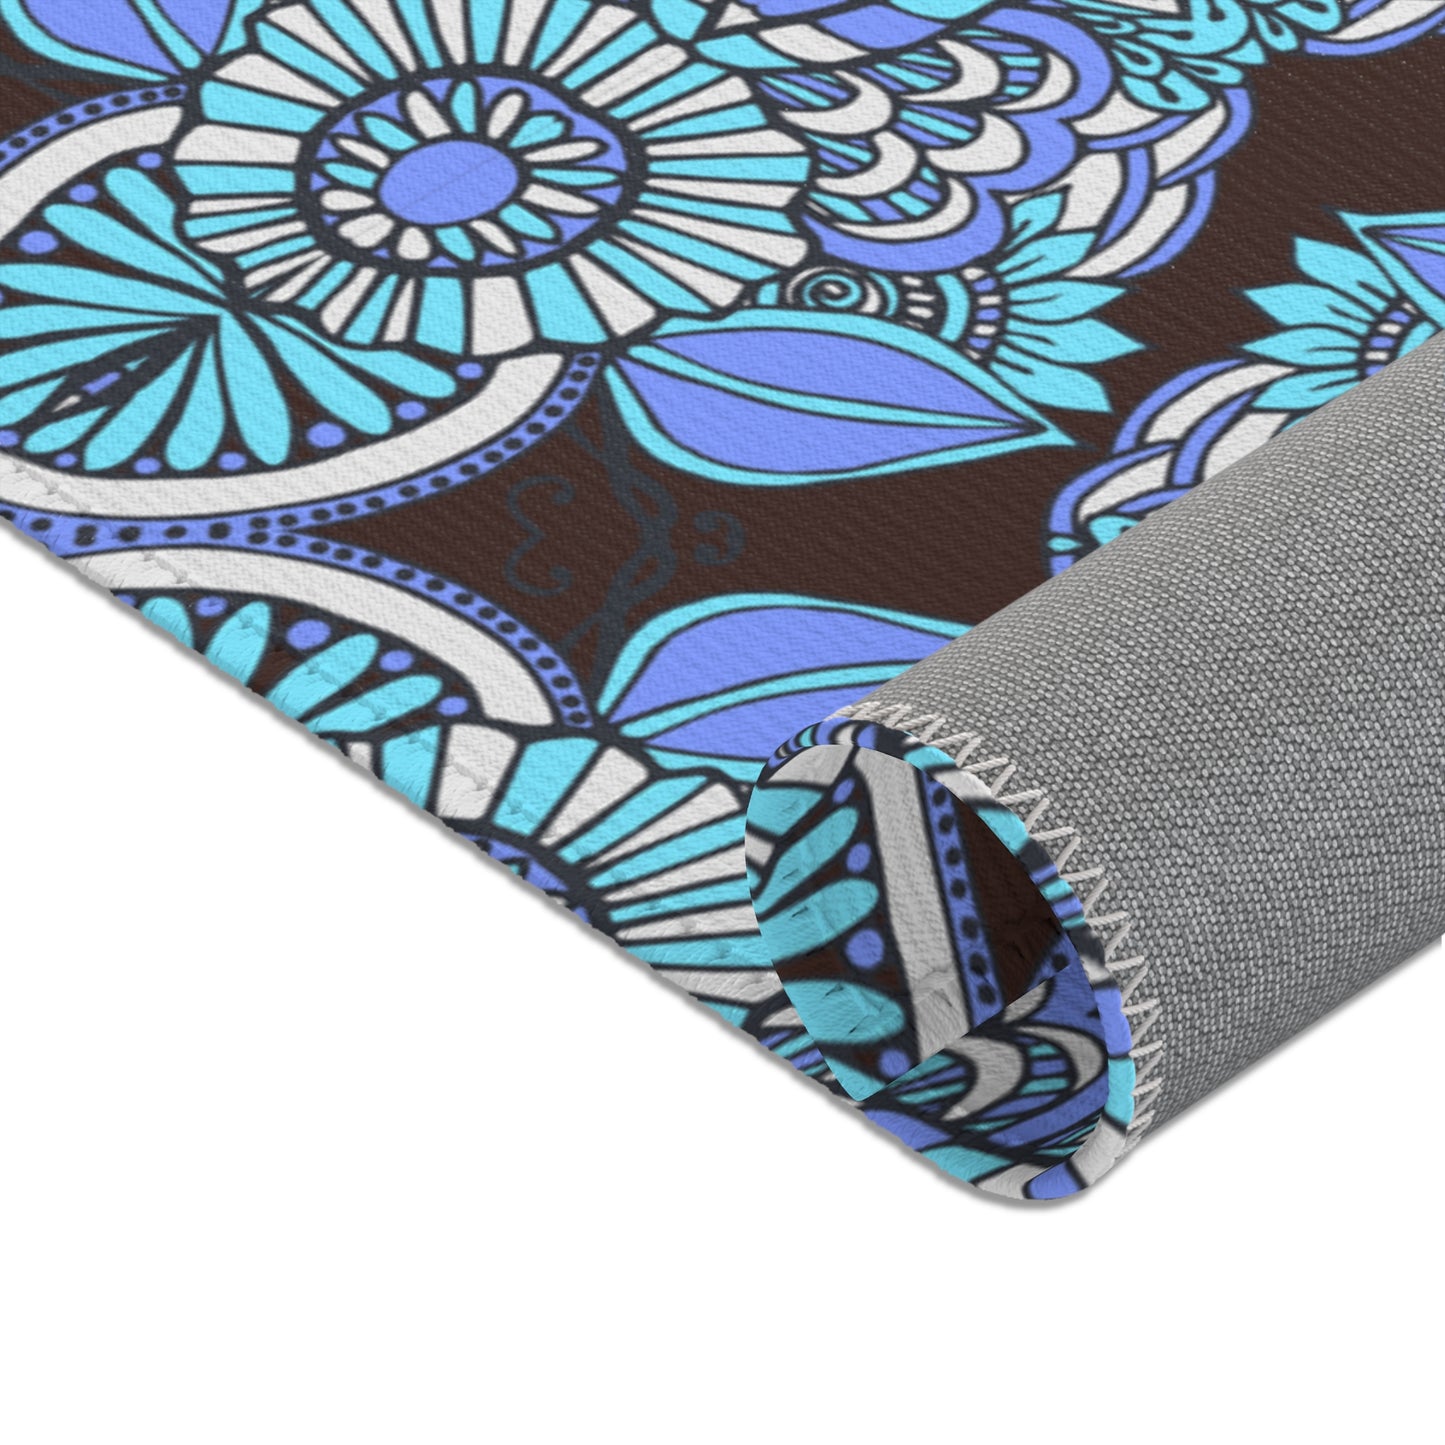 Niccie Vibrant Mandala Design Picnic Rug - Stylish & Durable